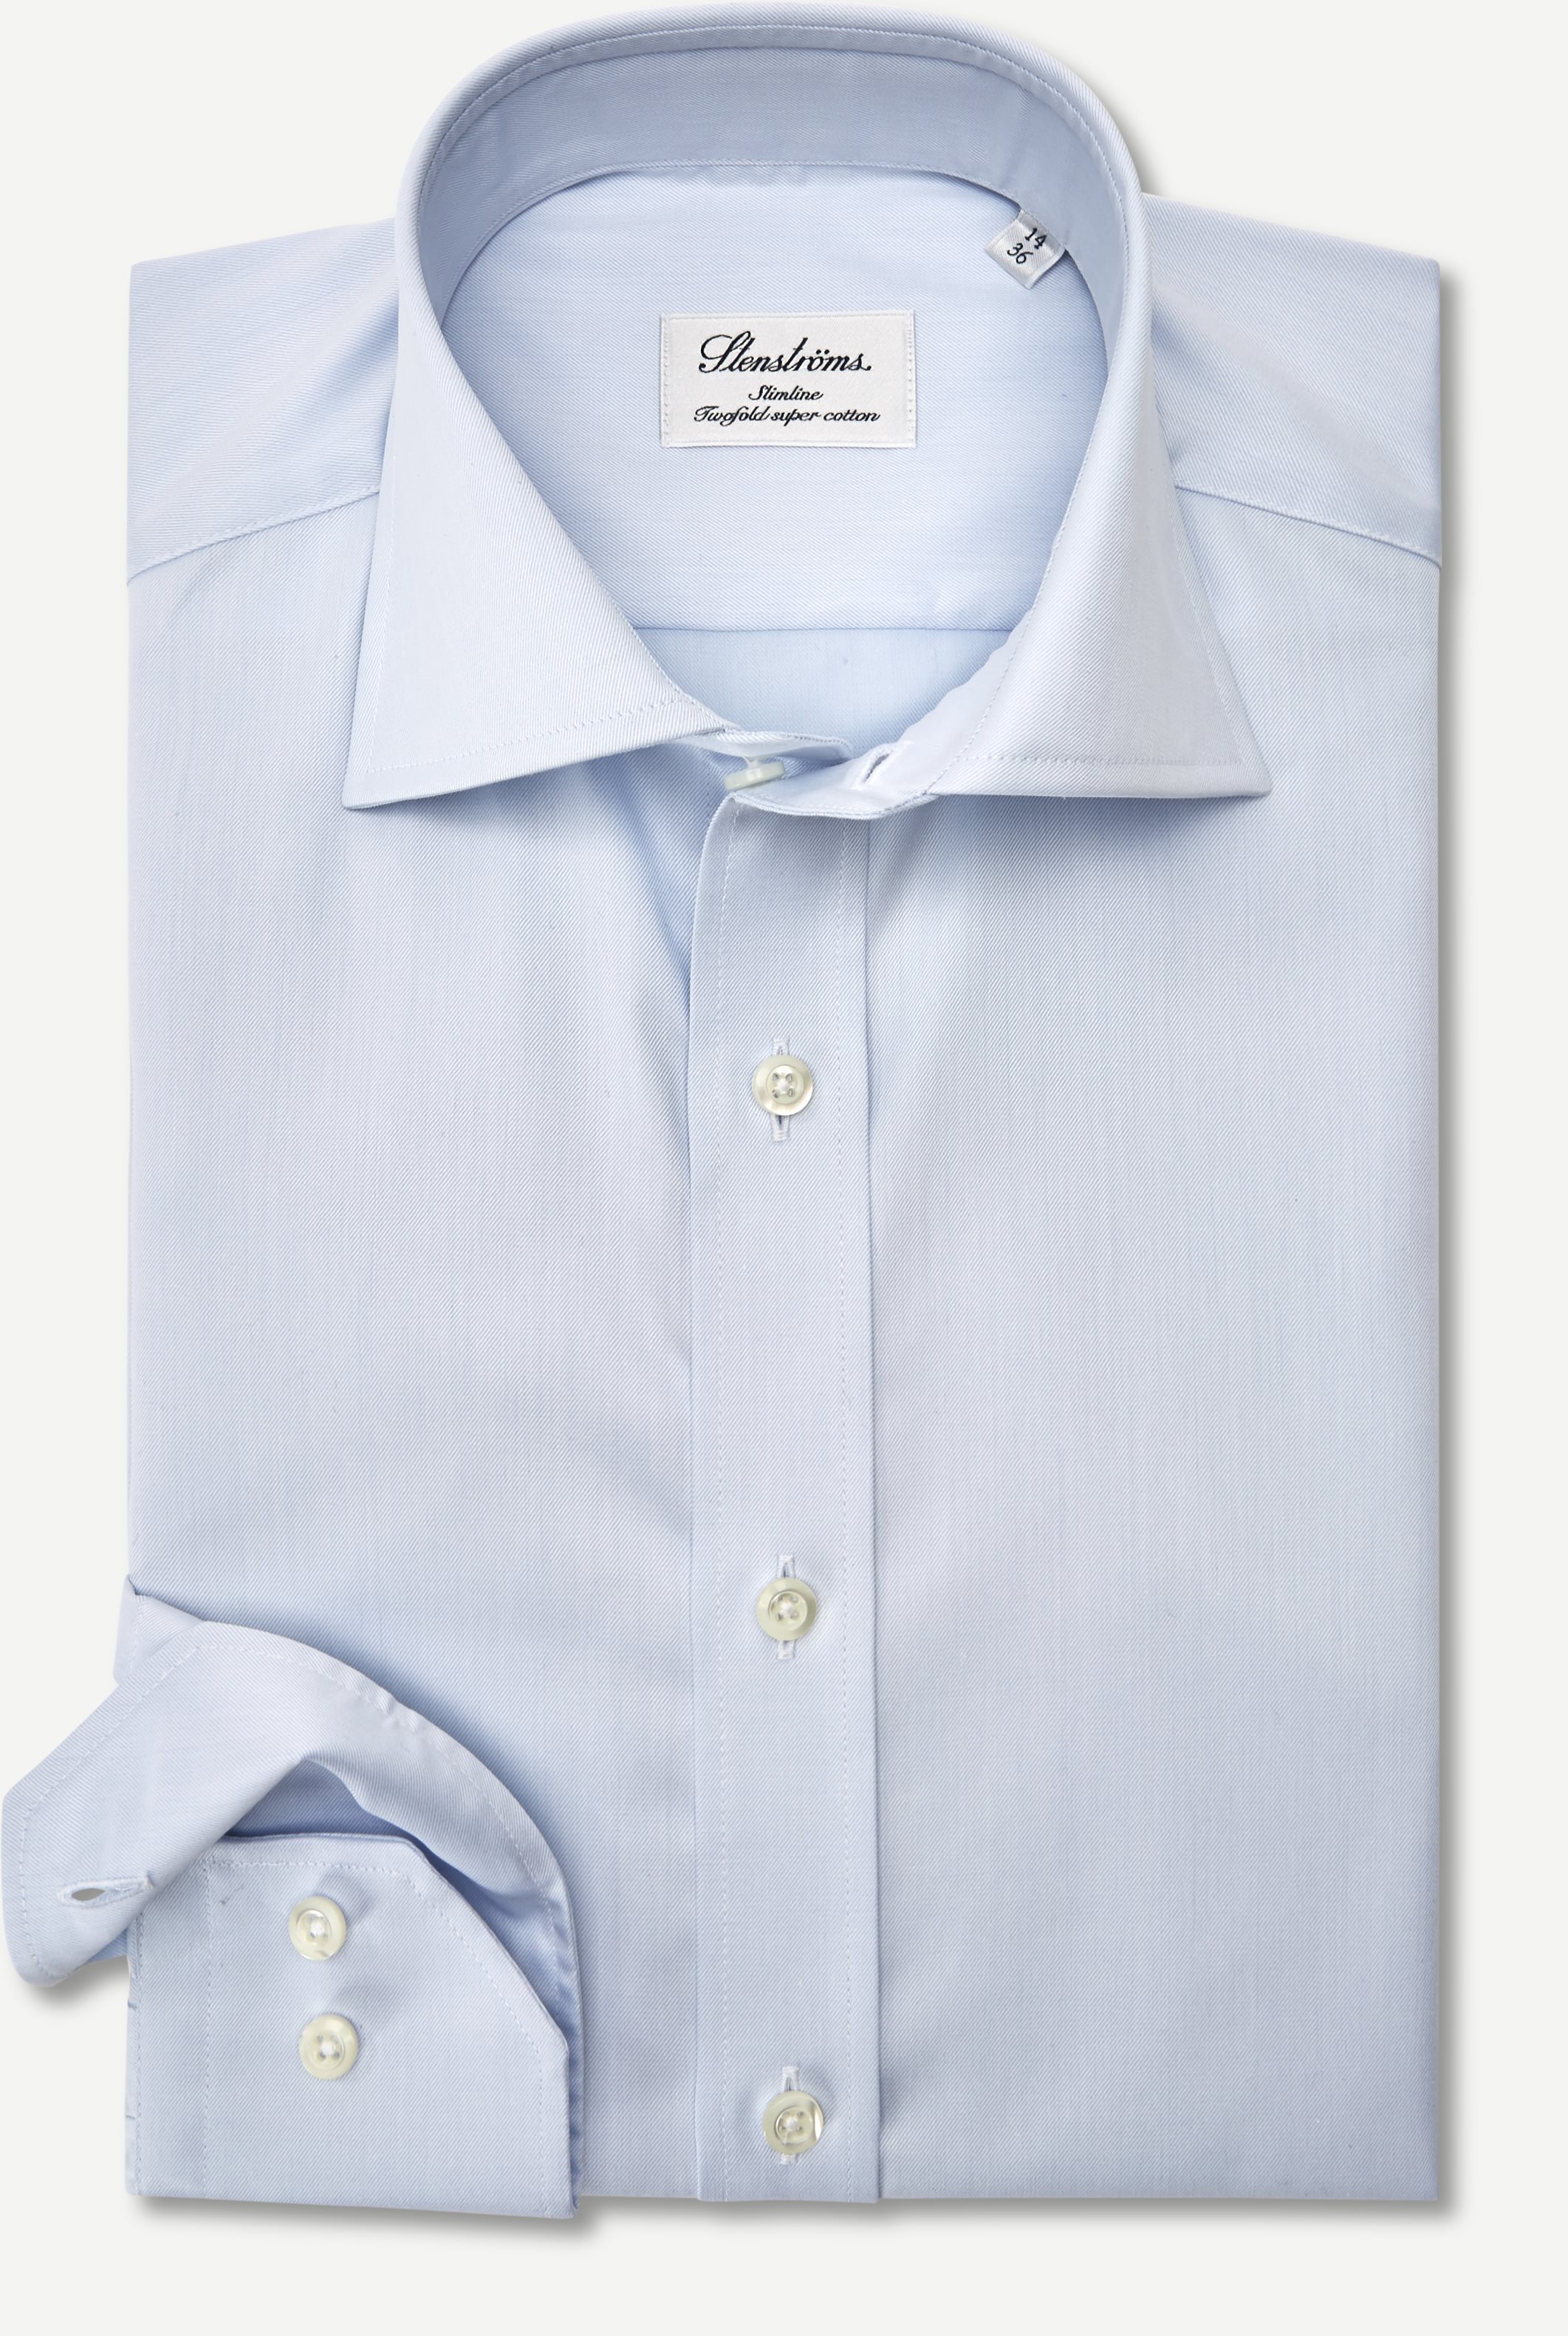 Tvåfaldig Super Cotton Shirt - Skjortor - Slim fit - Blå